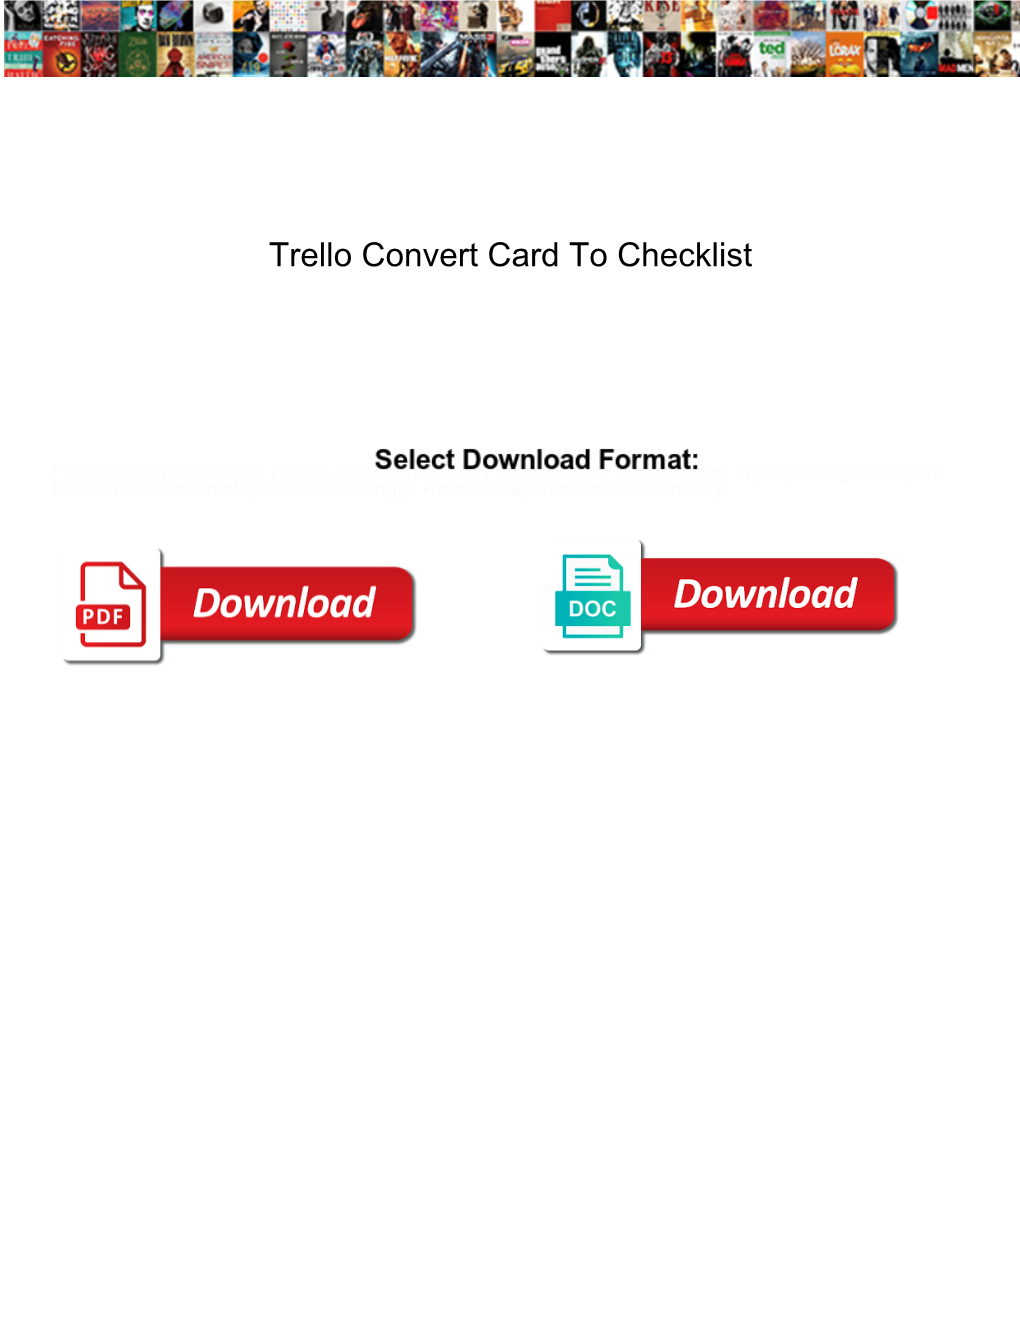 Trello Convert Card to Checklist